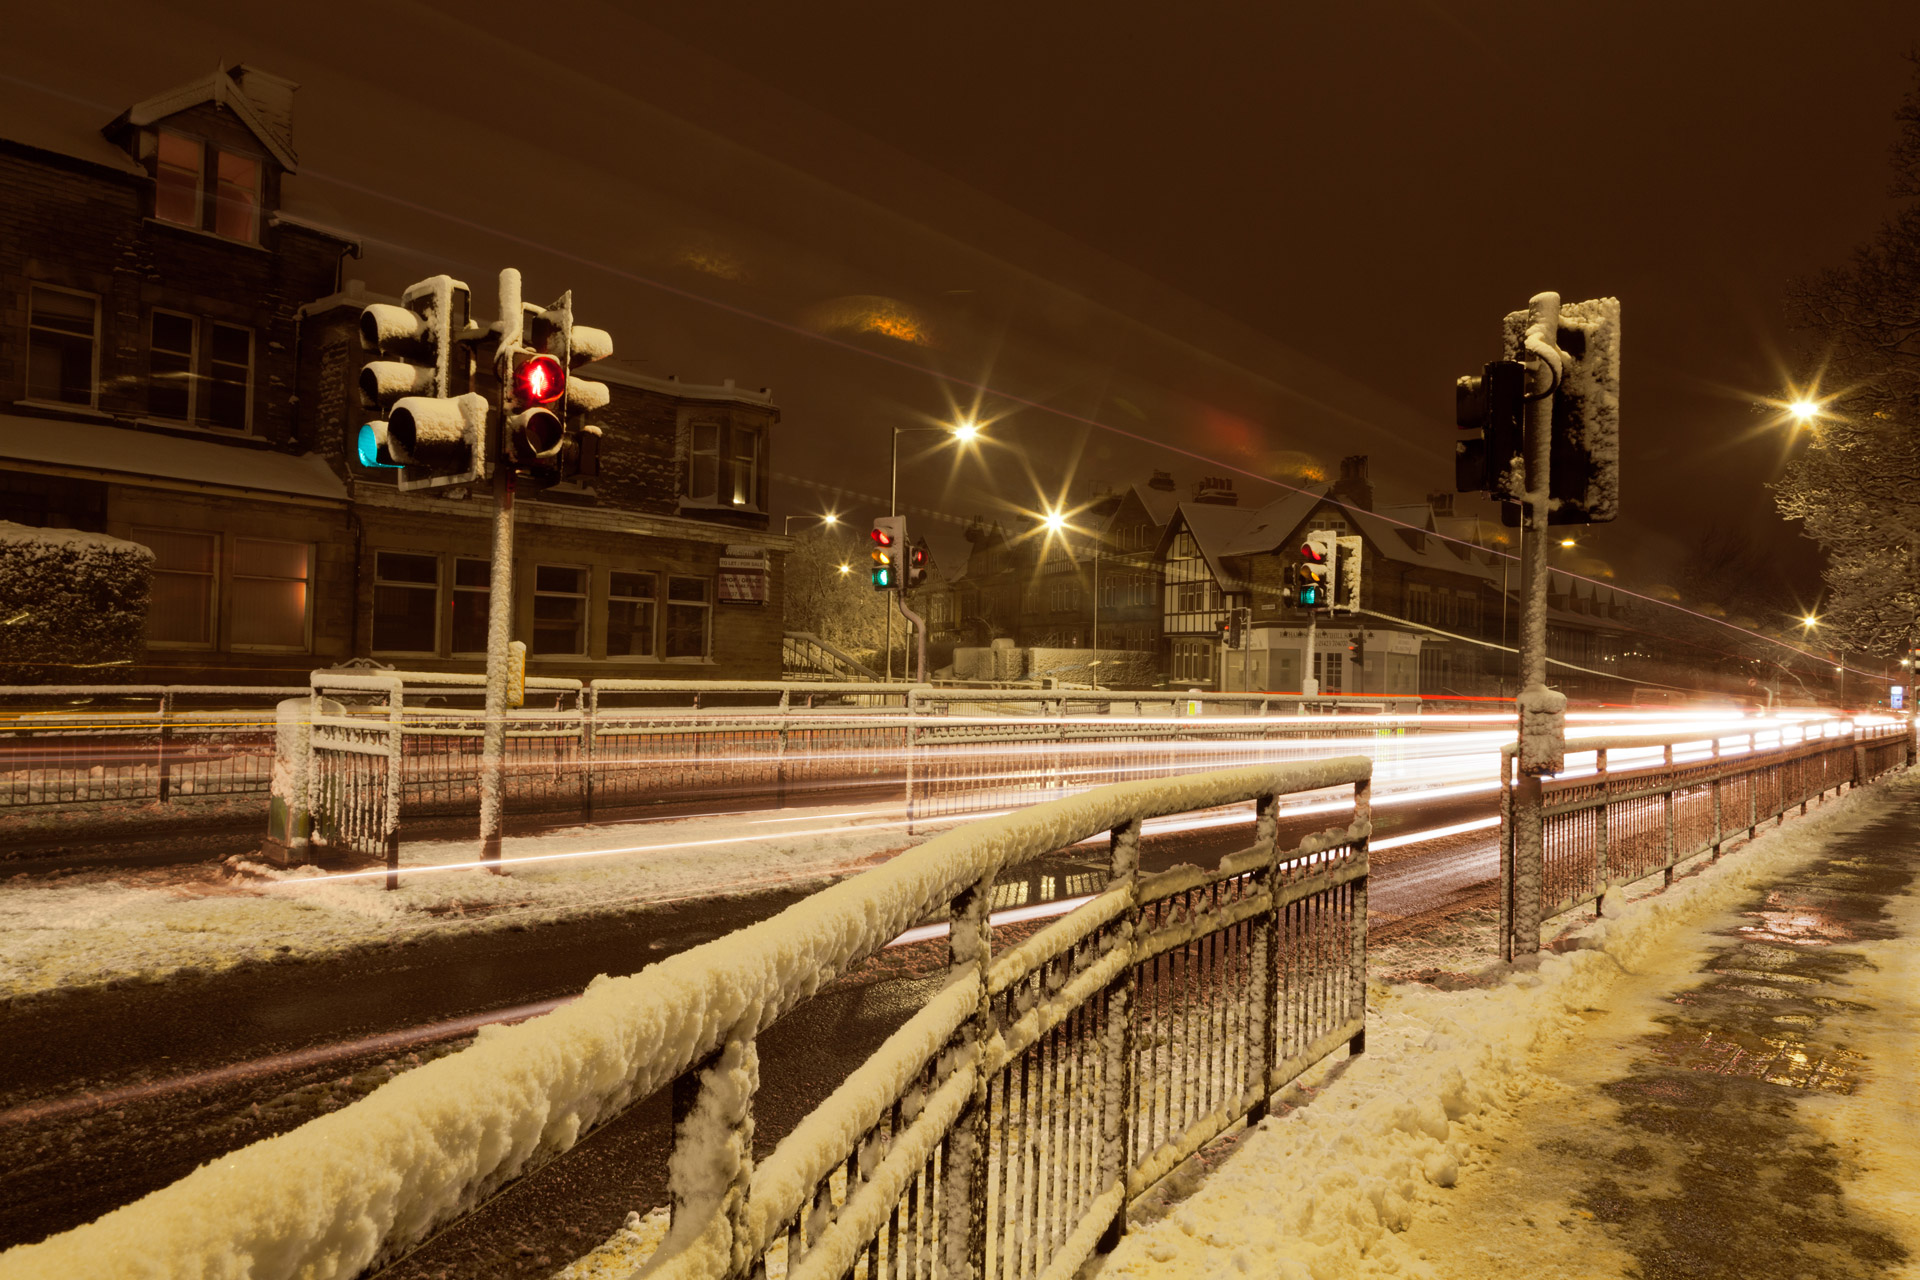 Traffic At Night In Winter